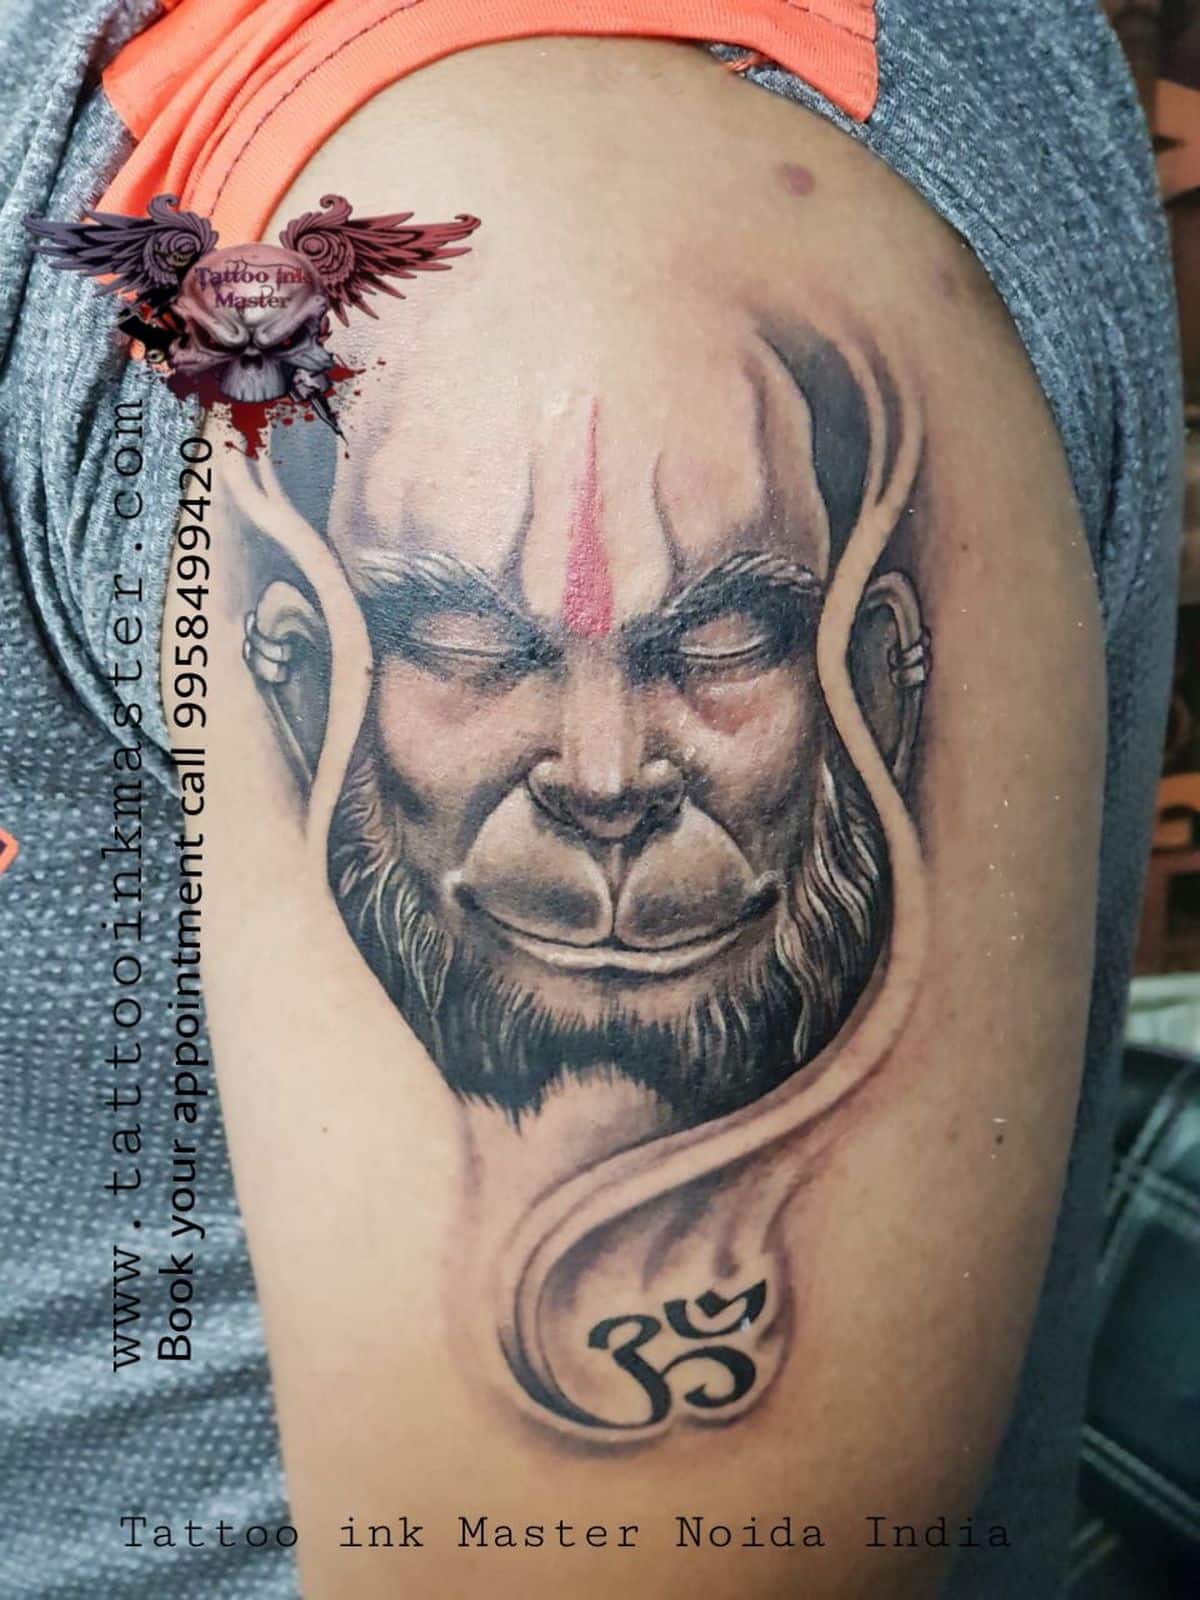 Religious Tattoo | Tattoo Ink Master